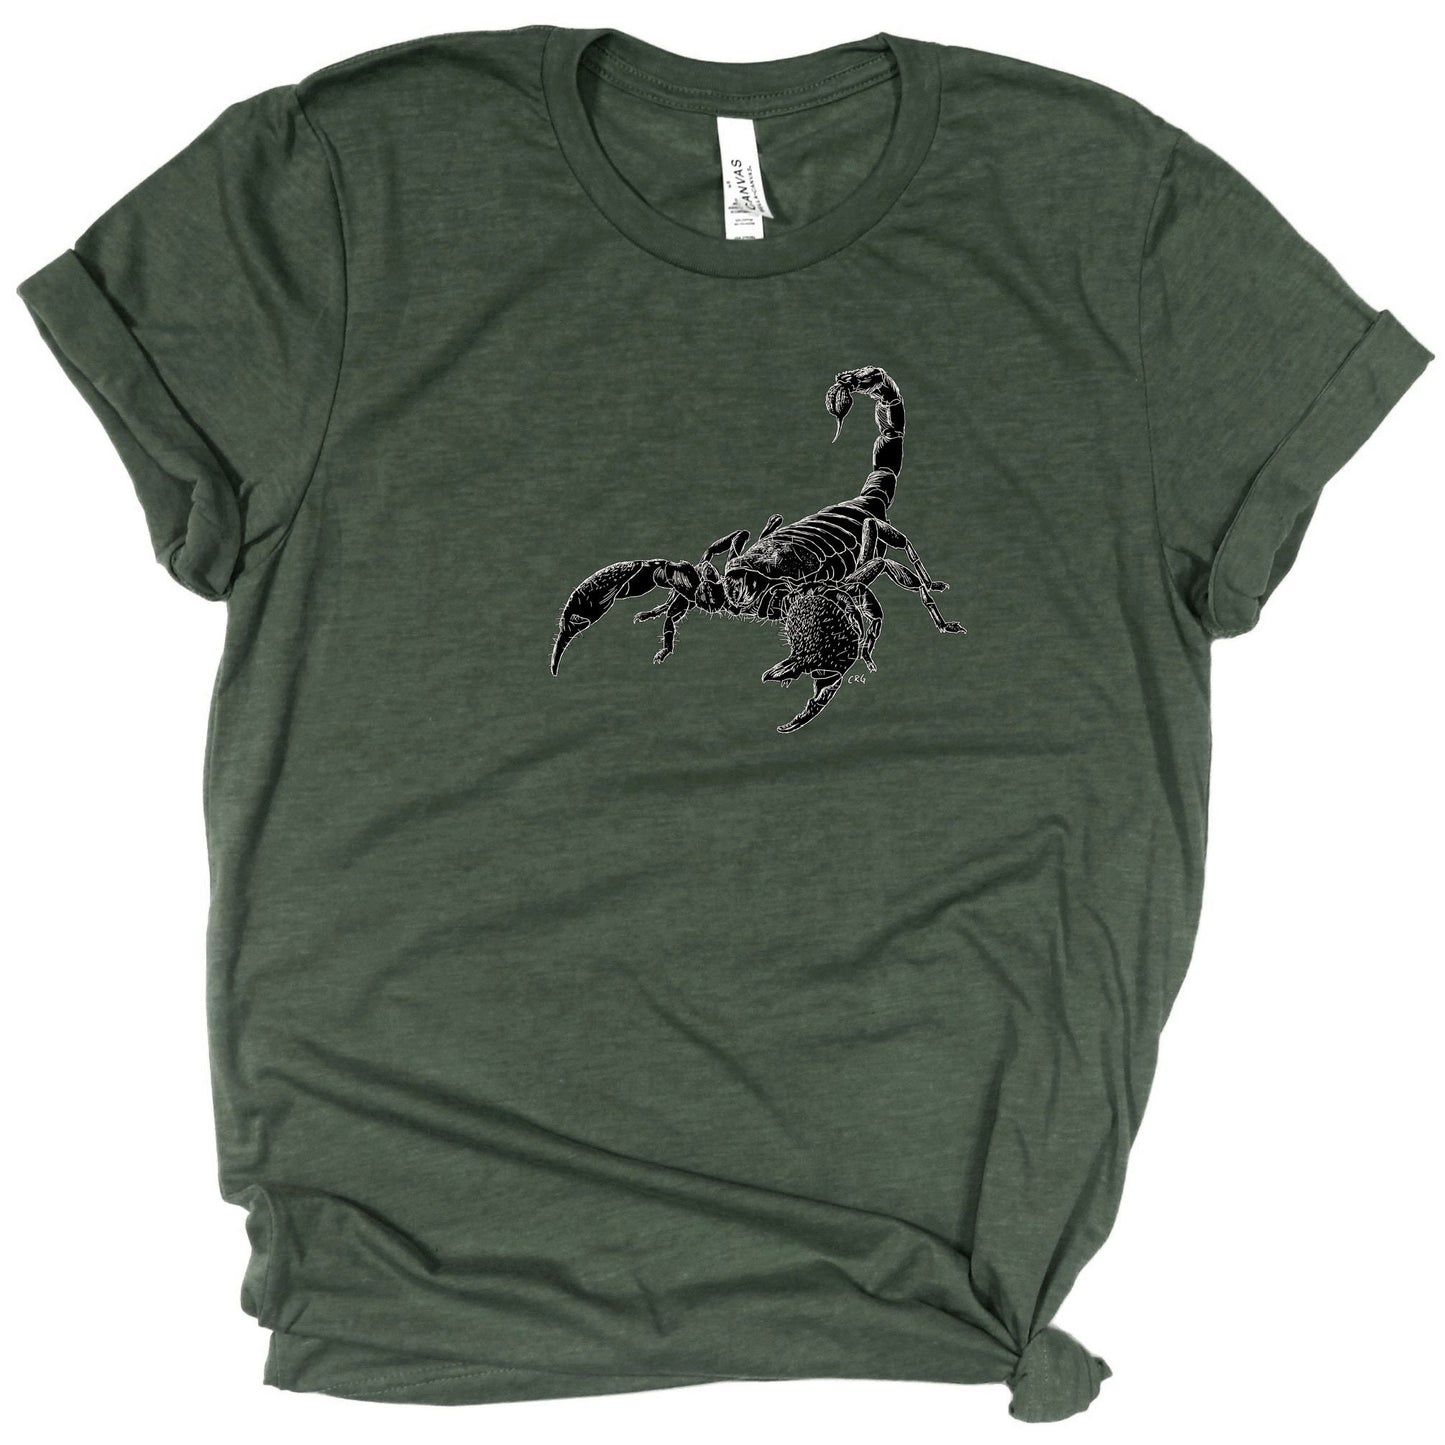 Scorpion Shirt  / Scorpion / Scorpions Shirt / Scorpion T-Shirt / Scorpion Gift / Scorpion TShirt / Scorpion T Shirt / Scorpions